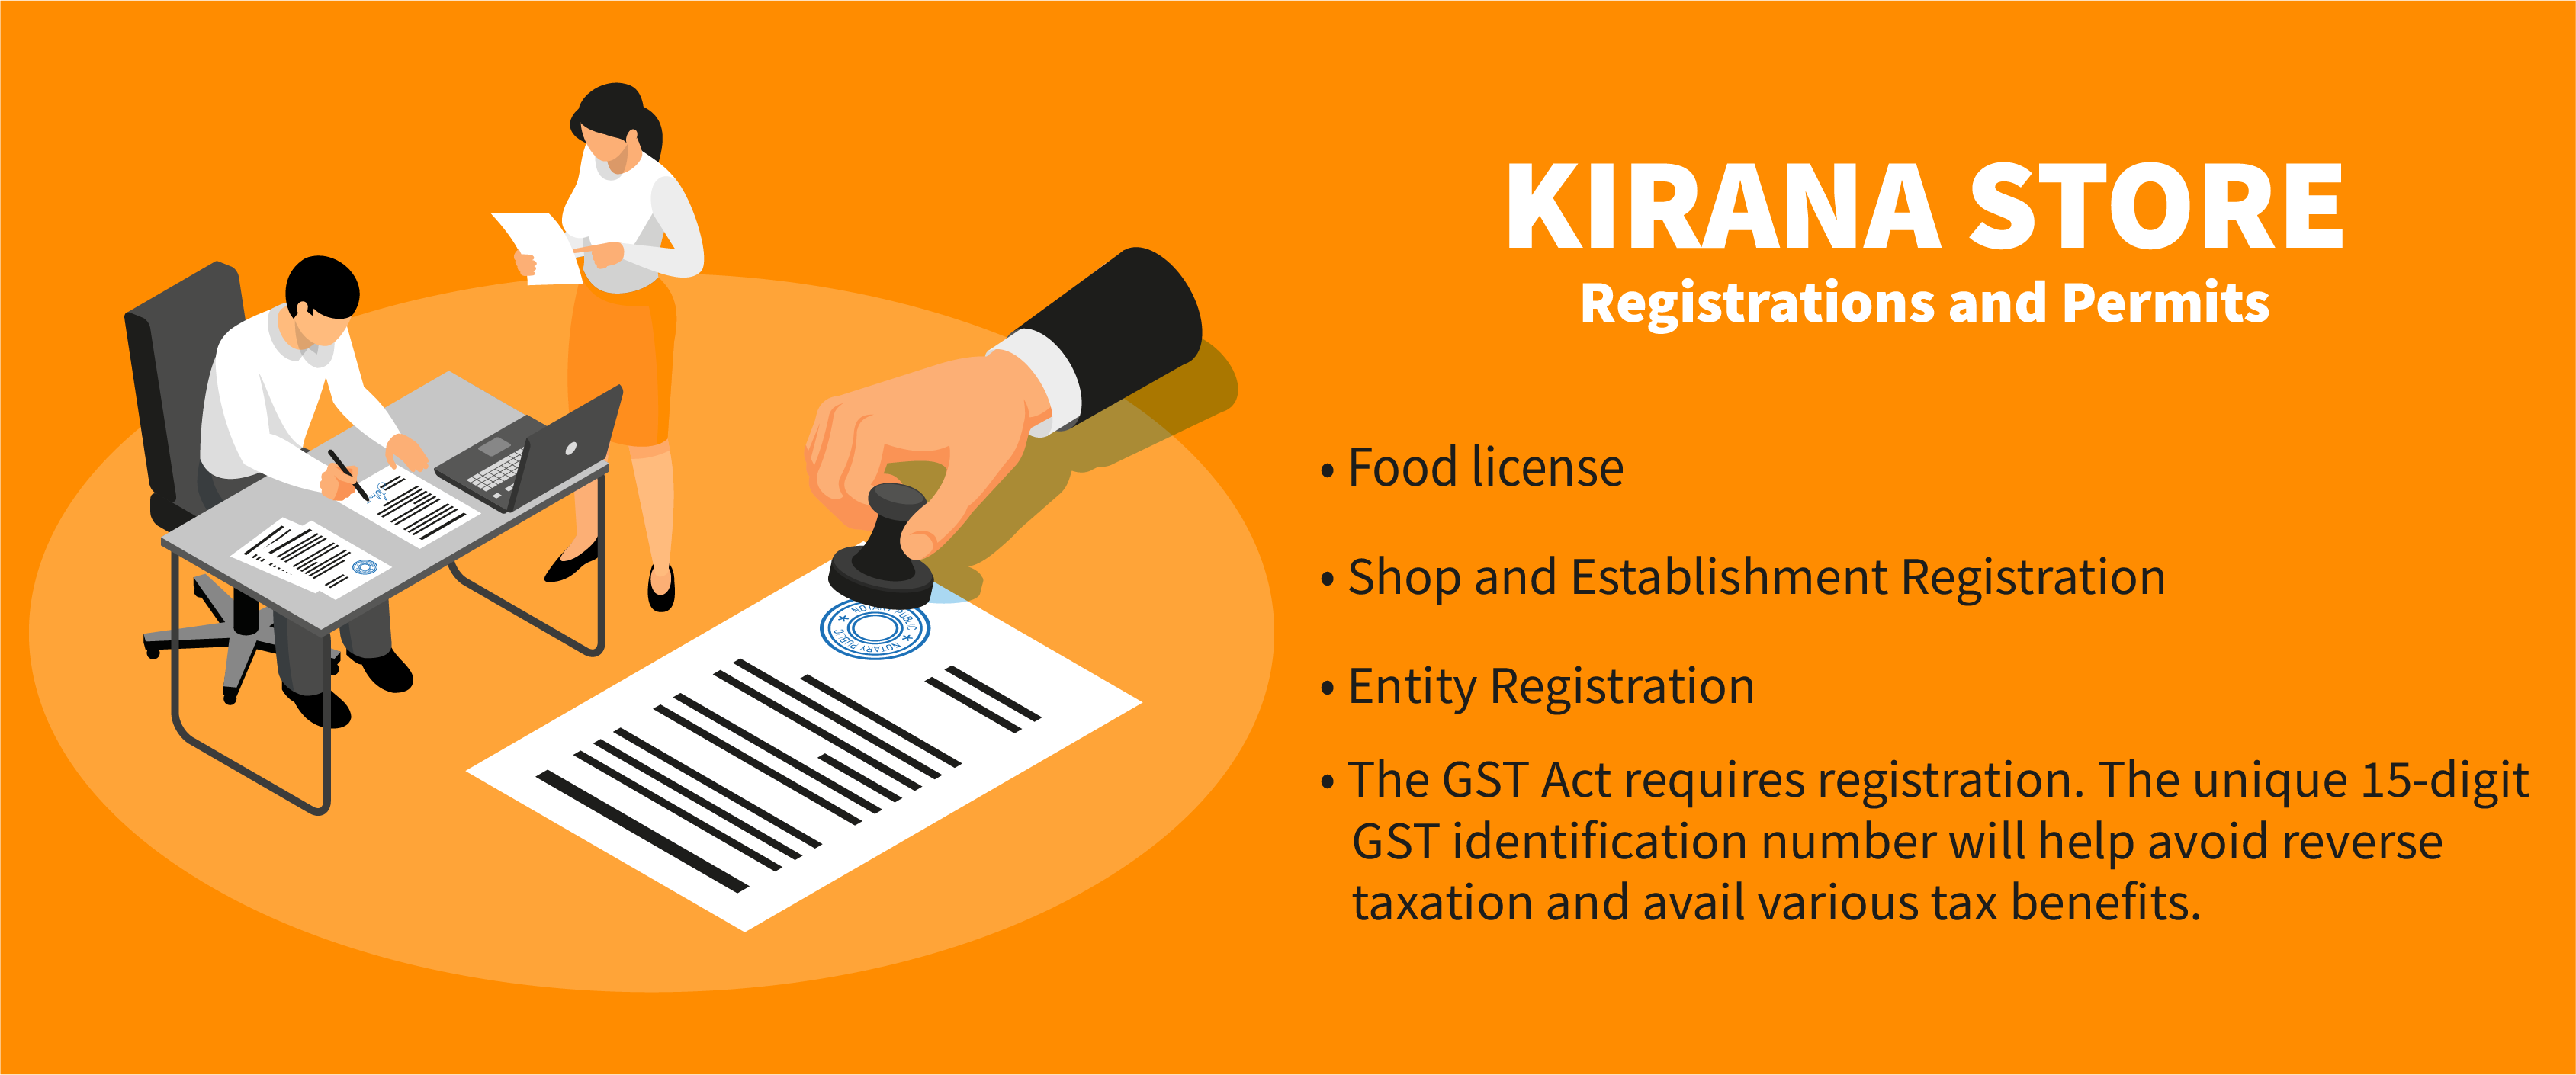 kirana store business plan pdf